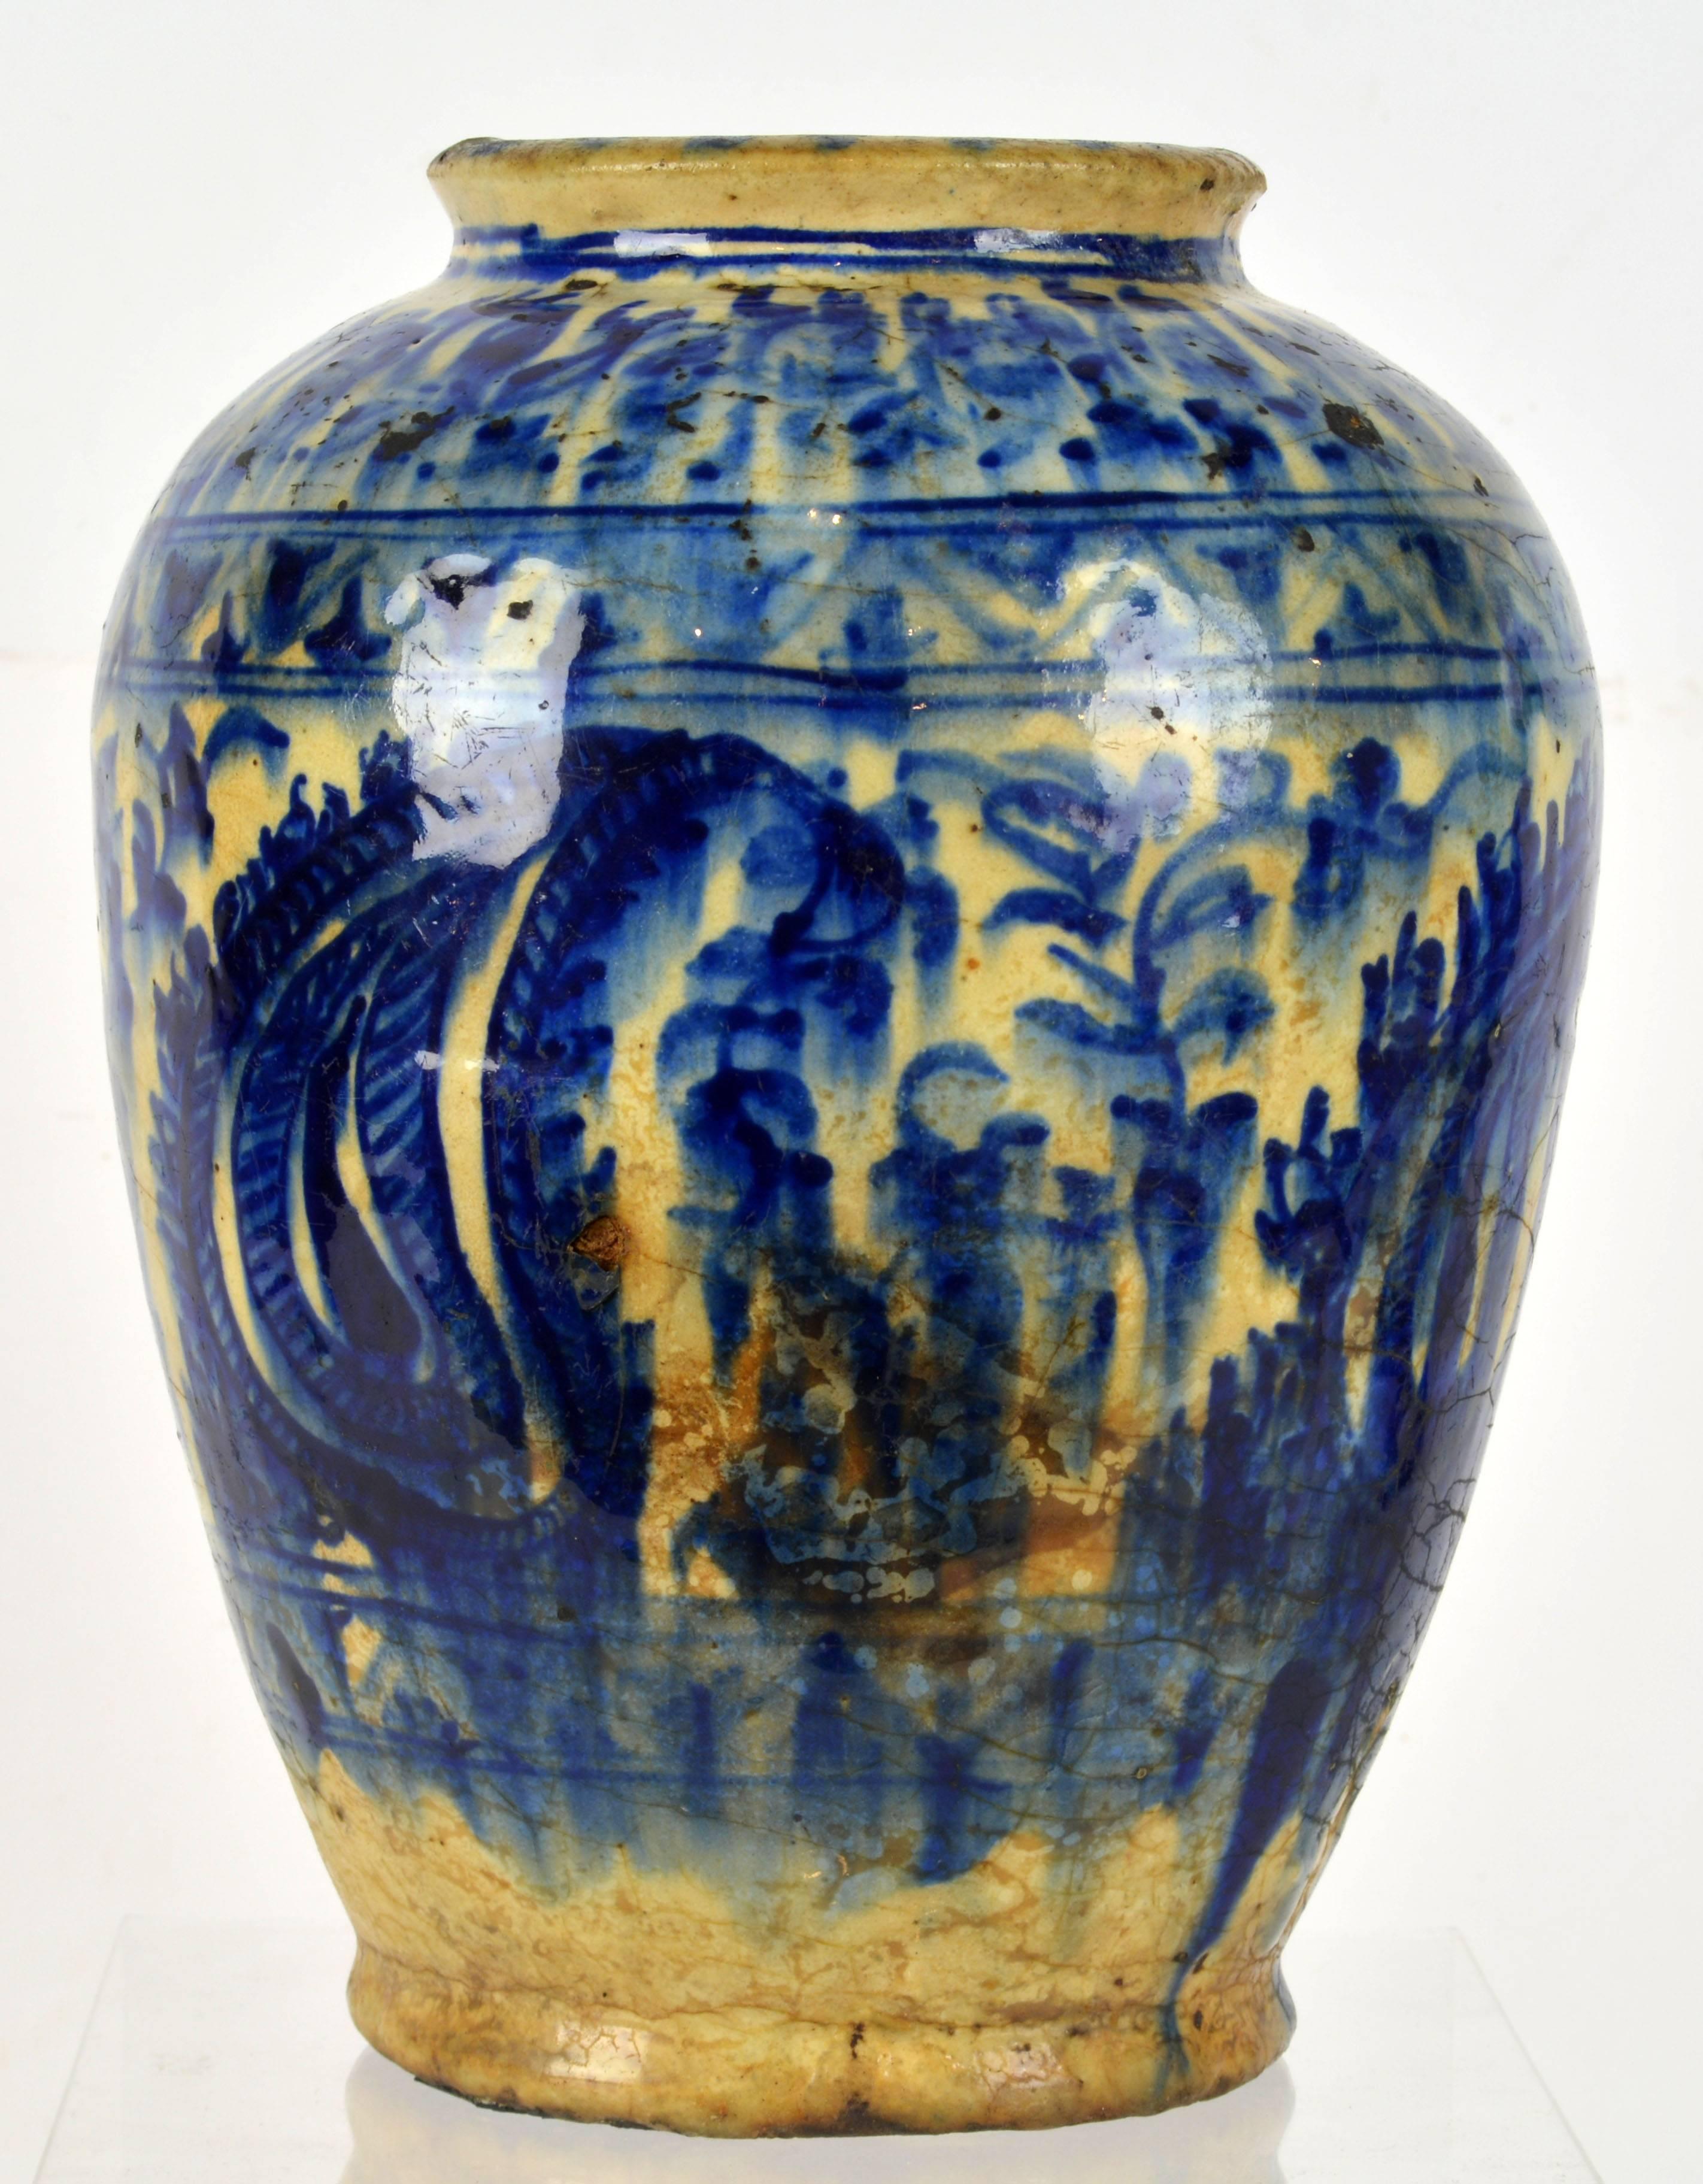 Glazed Rare Islamic Mamluk Period 16th Century Likely Syrian Blue and White Ceramic Jar